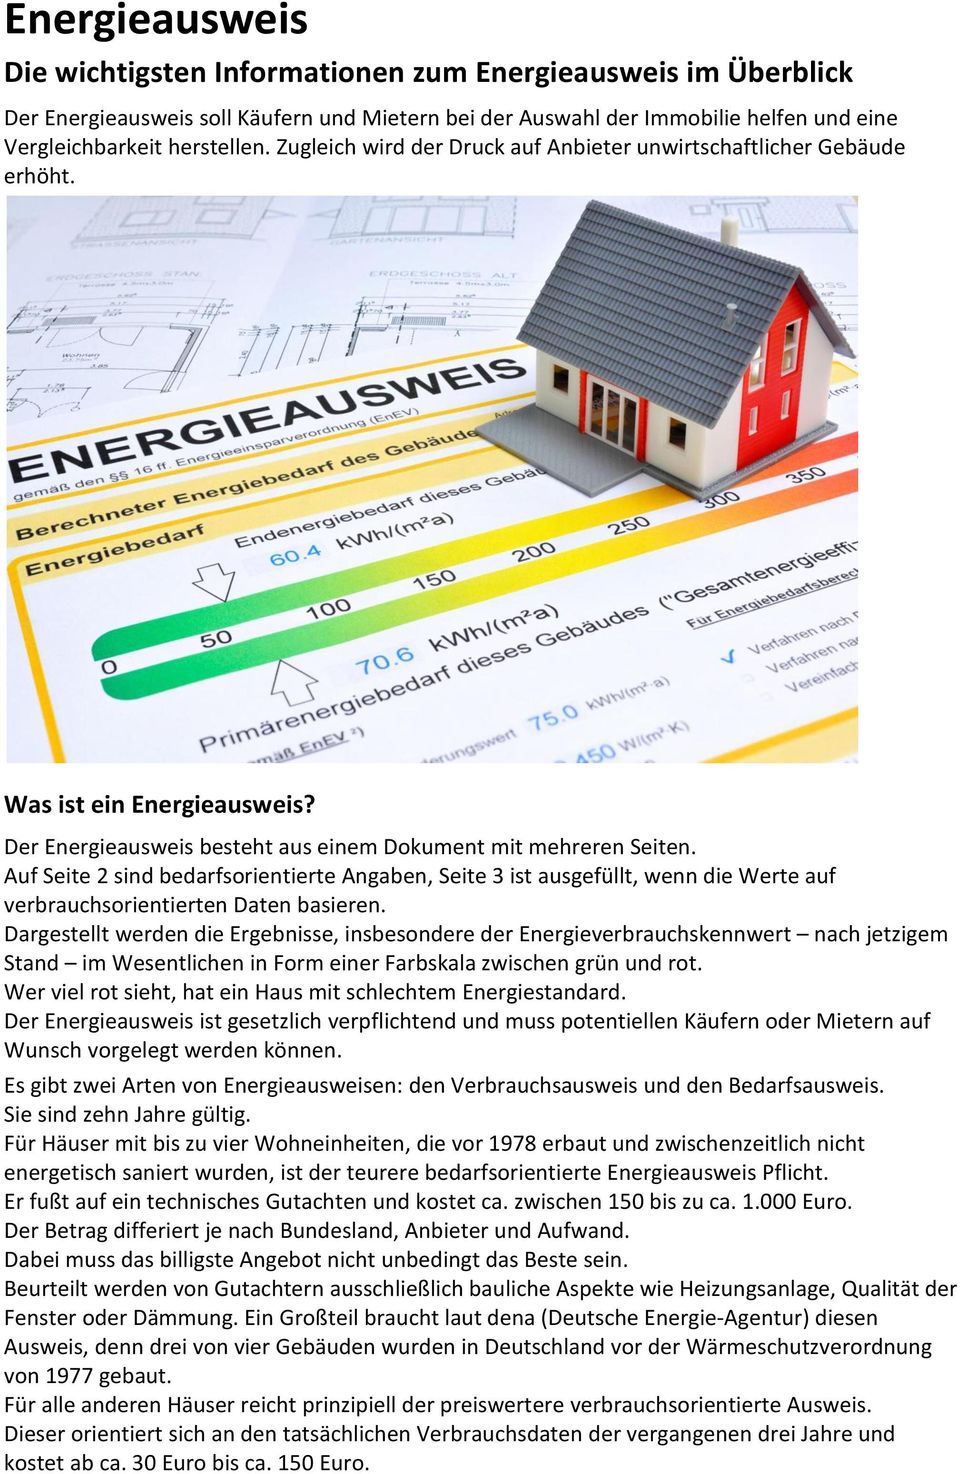 nach EnEV Energieausweis Verbrauchsausweis 10 Jahre gültig Energiepass PDF 